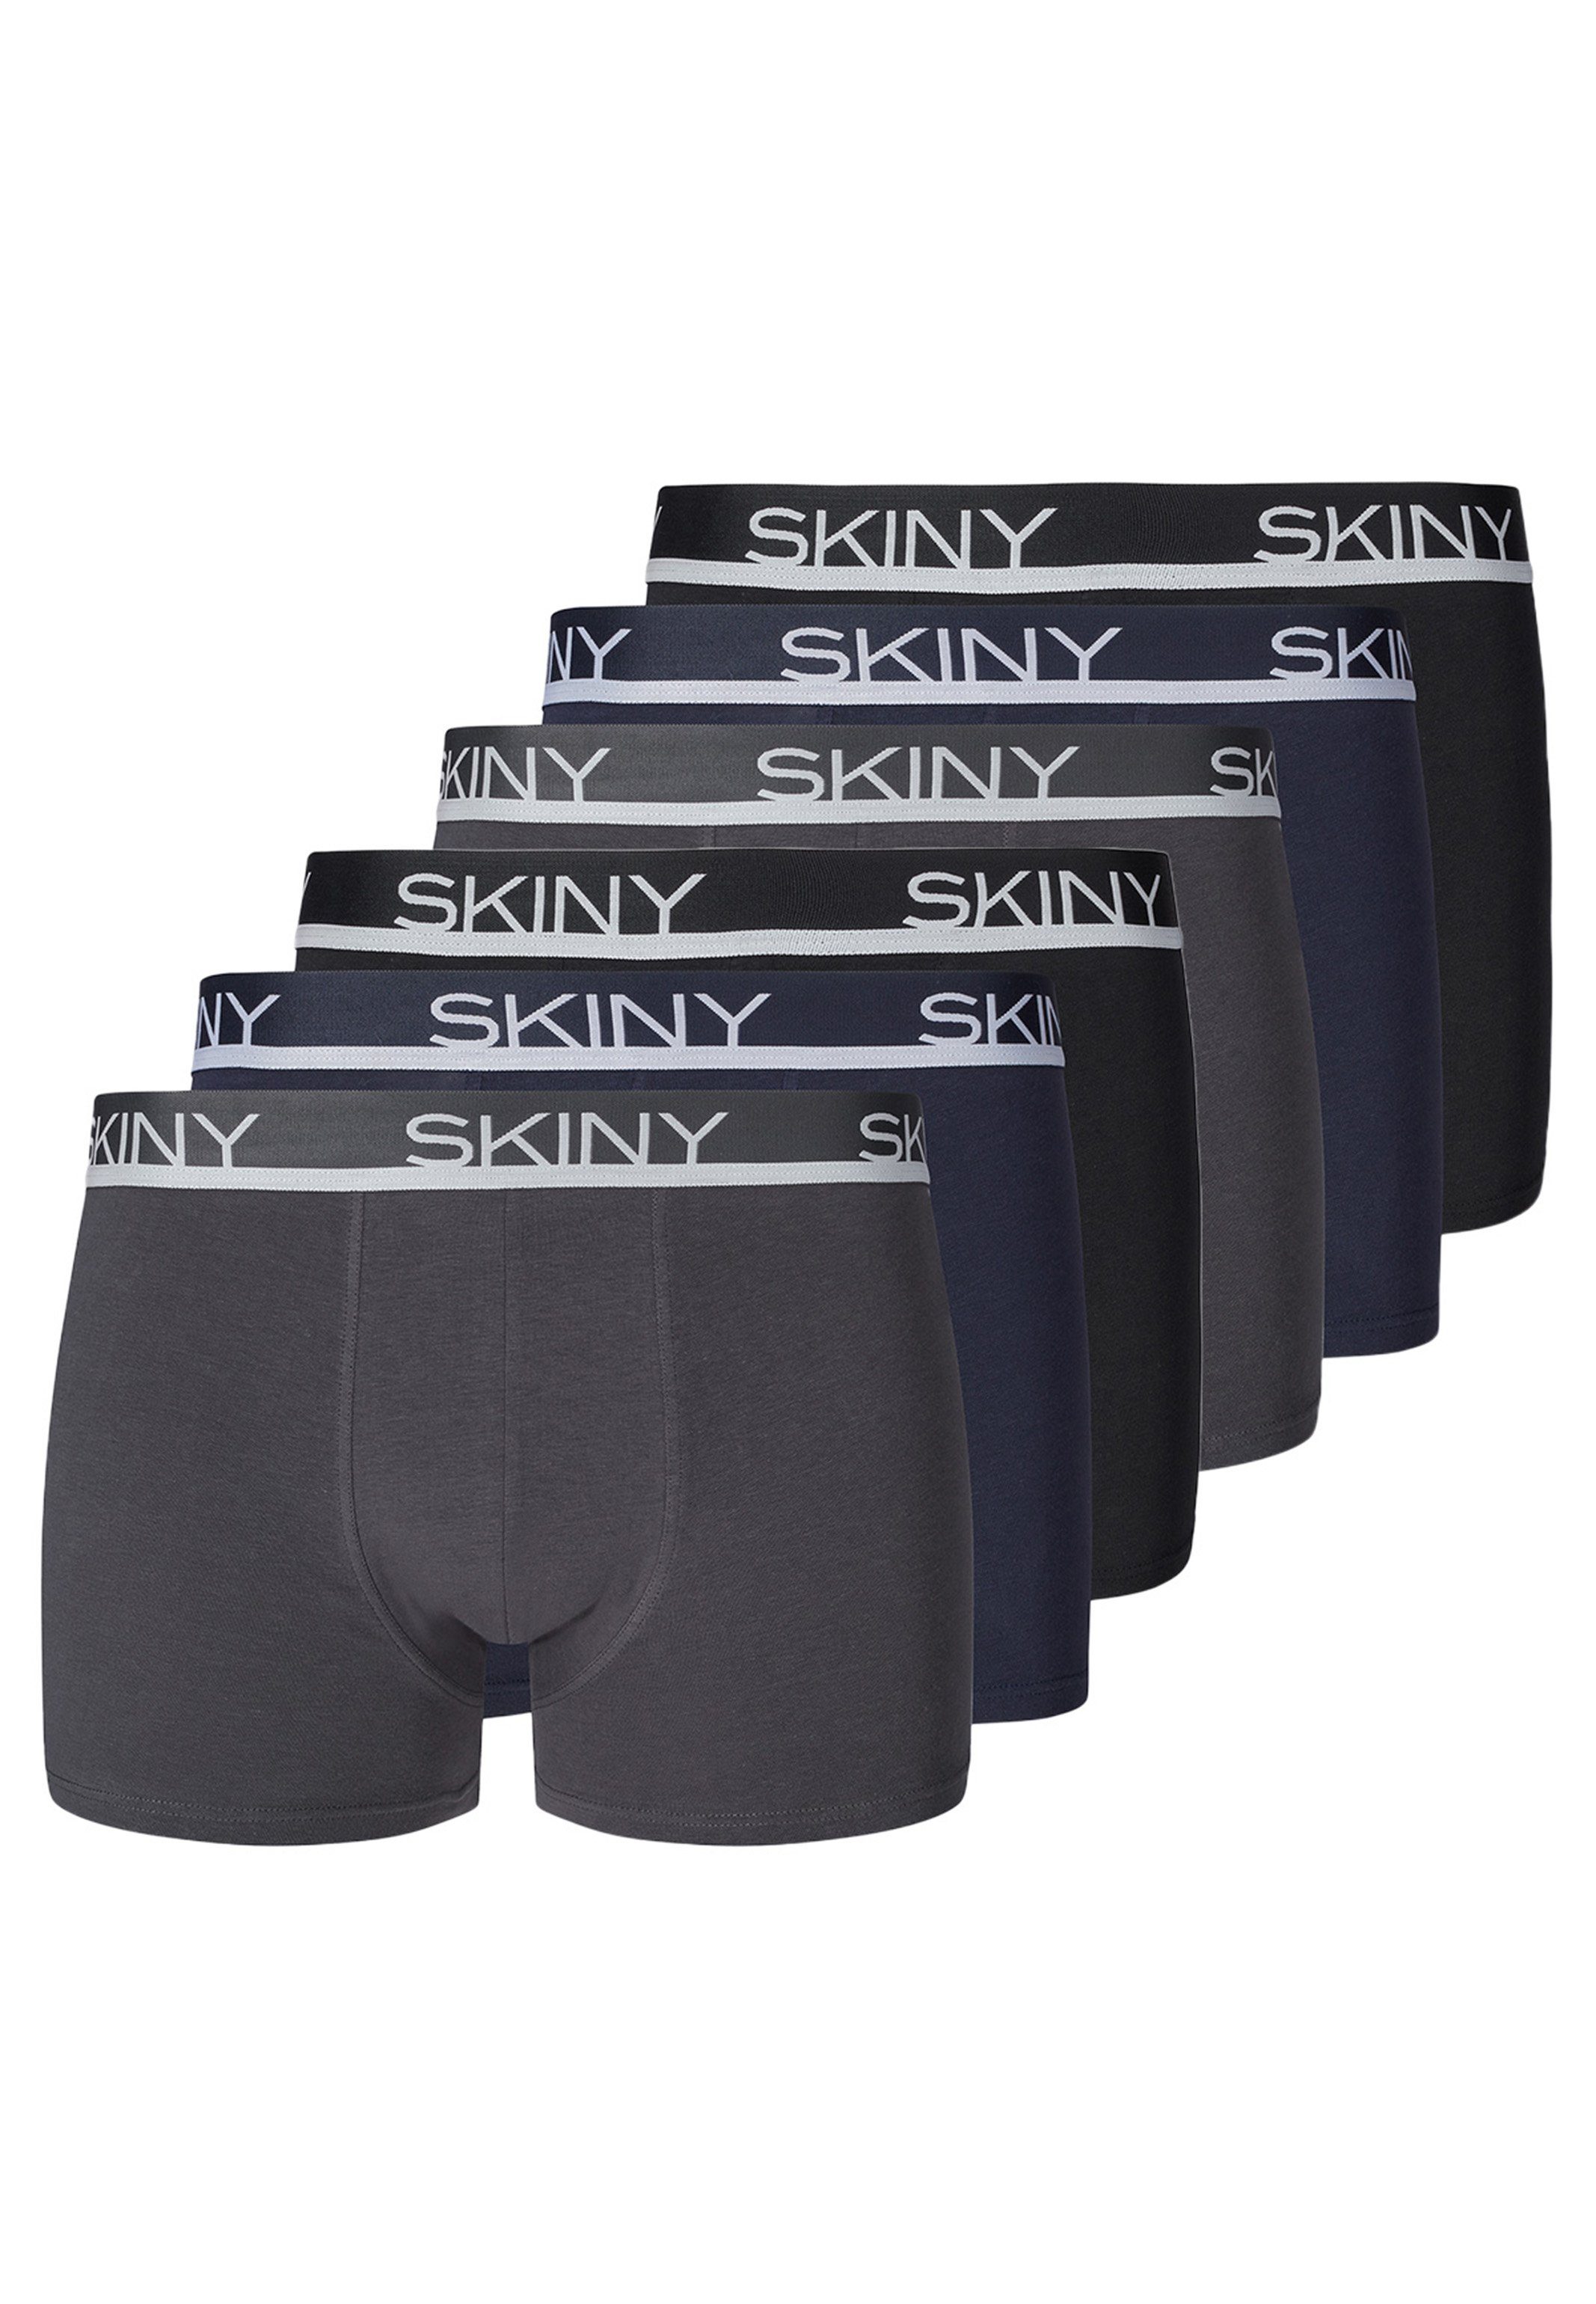 Skiny Retro Boxer 6er Pack Cotton (Spar-Set, 6-St) Retro Short / Pant - Baumwolle - Ohne Eingriff - Körpernaher Schnitt Grau / Blau